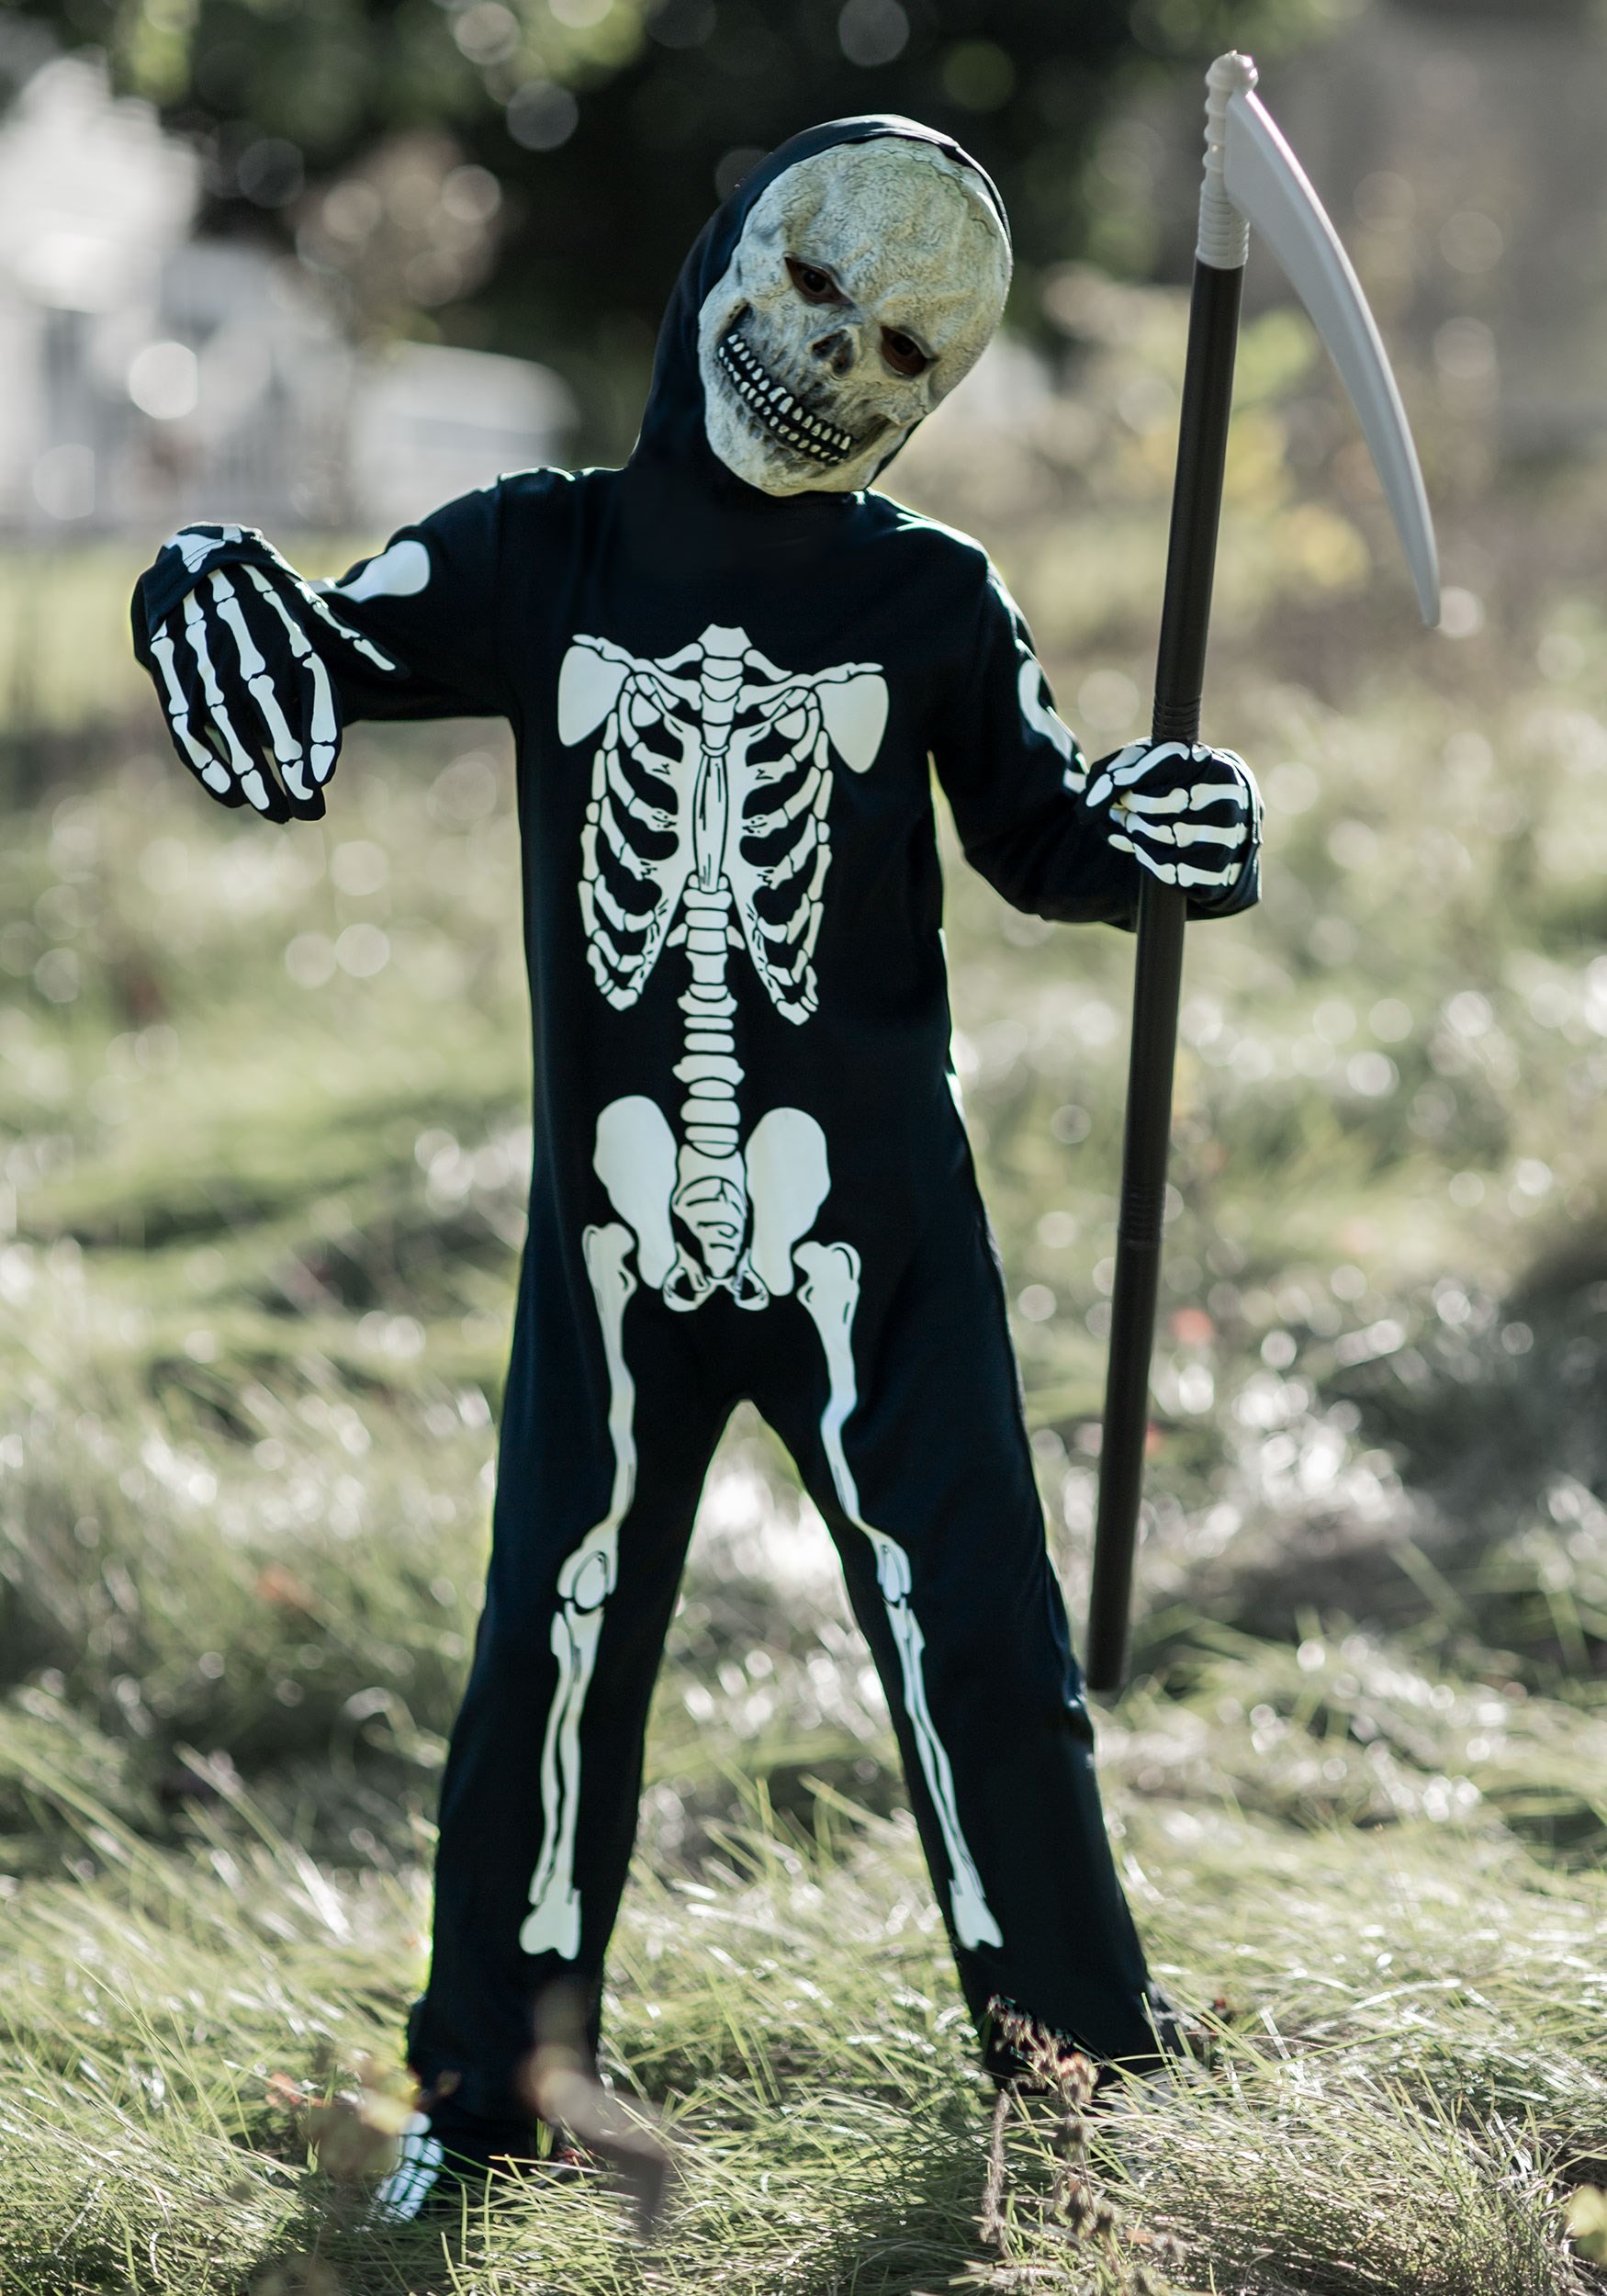 Skelton costume